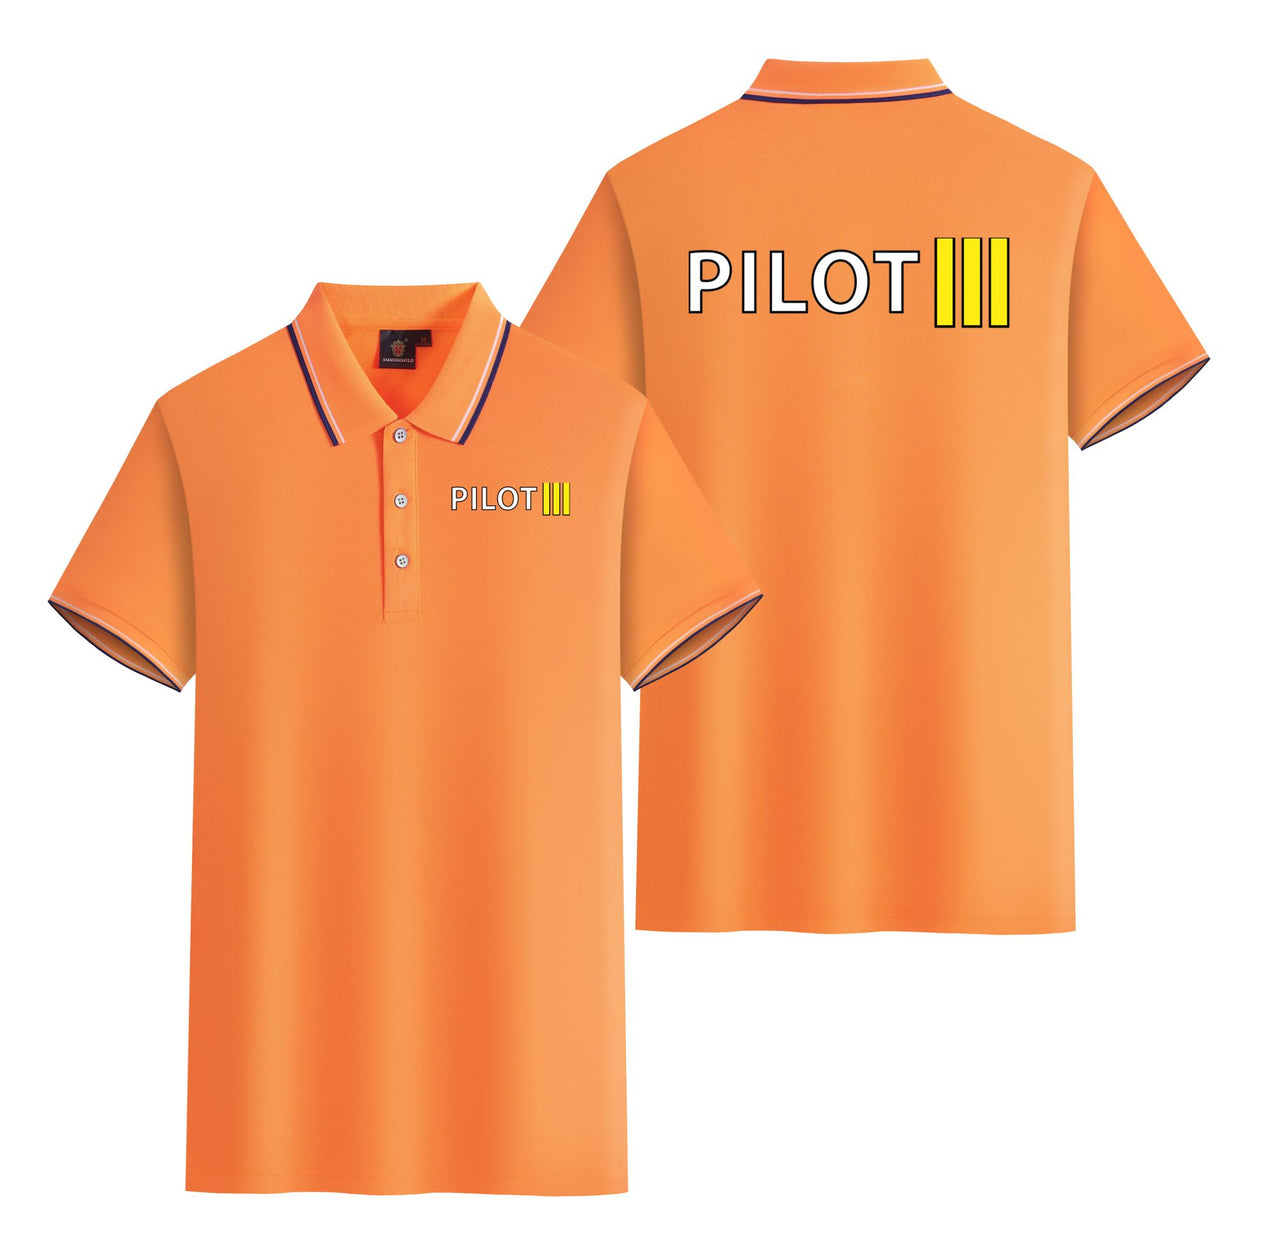 Pilot & Stripes (3 Lines) Designed Stylish Polo T-Shirts (Double-Side)